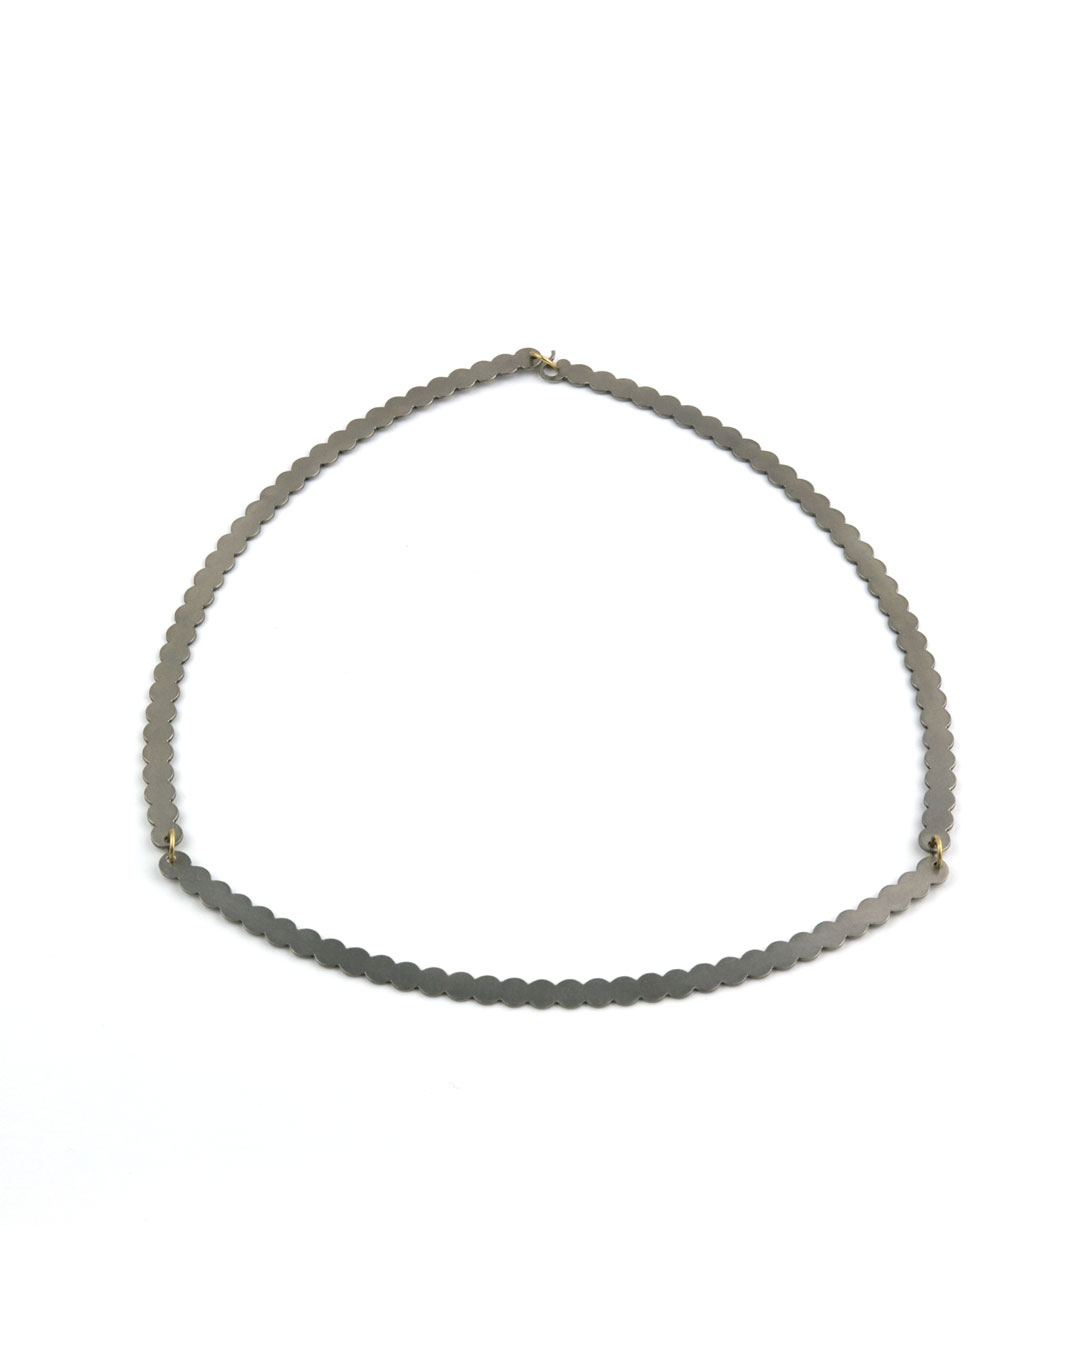 Karola Torkos, Modula, 2007, necklace; stainless steel, 8ct gold, ø 180 mm, €715